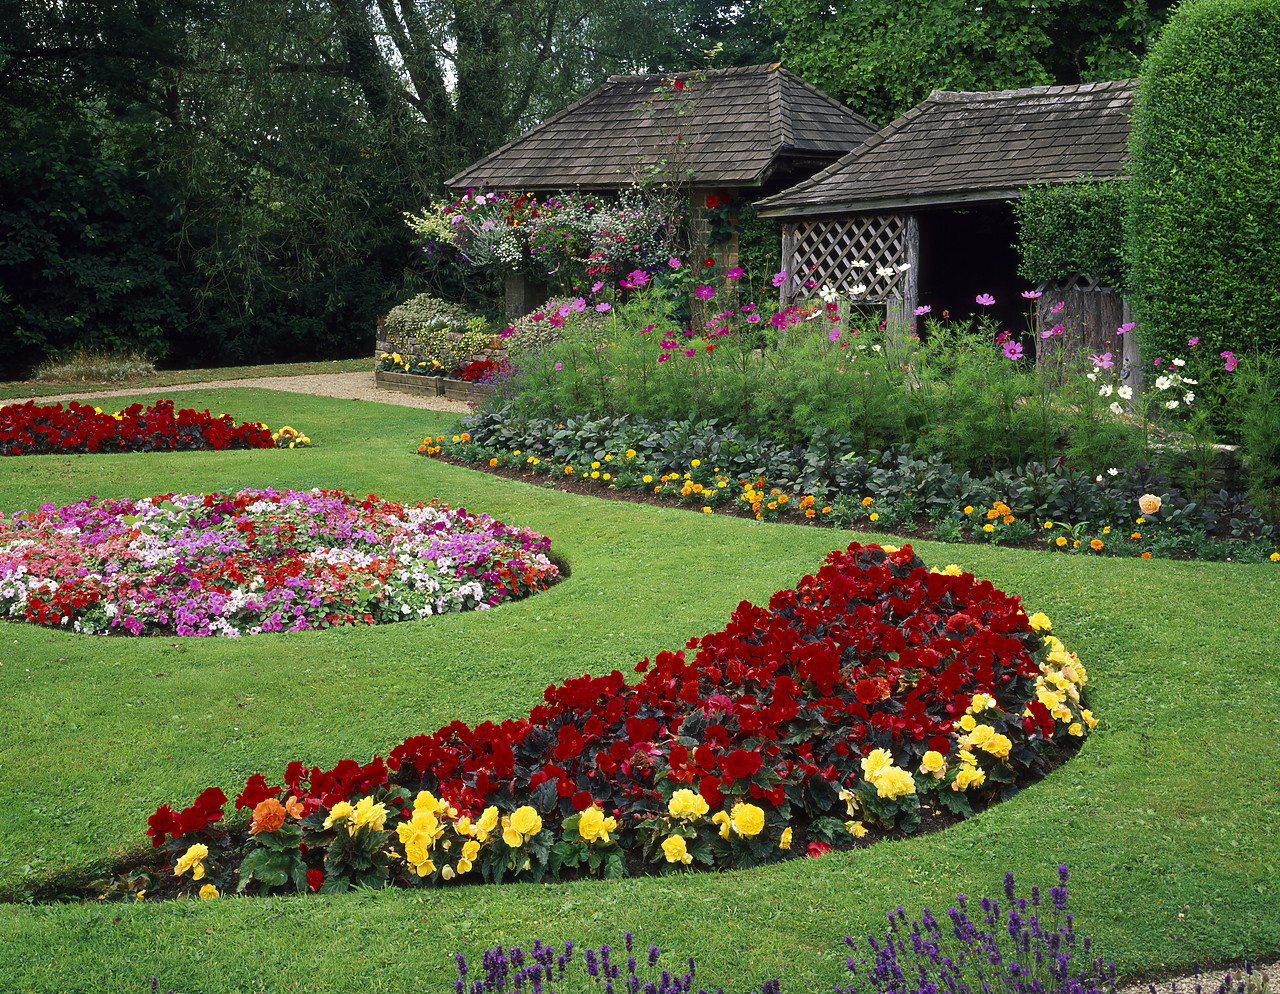 #990475-3 - Village Garden, Bibury, Gloucestershire, England